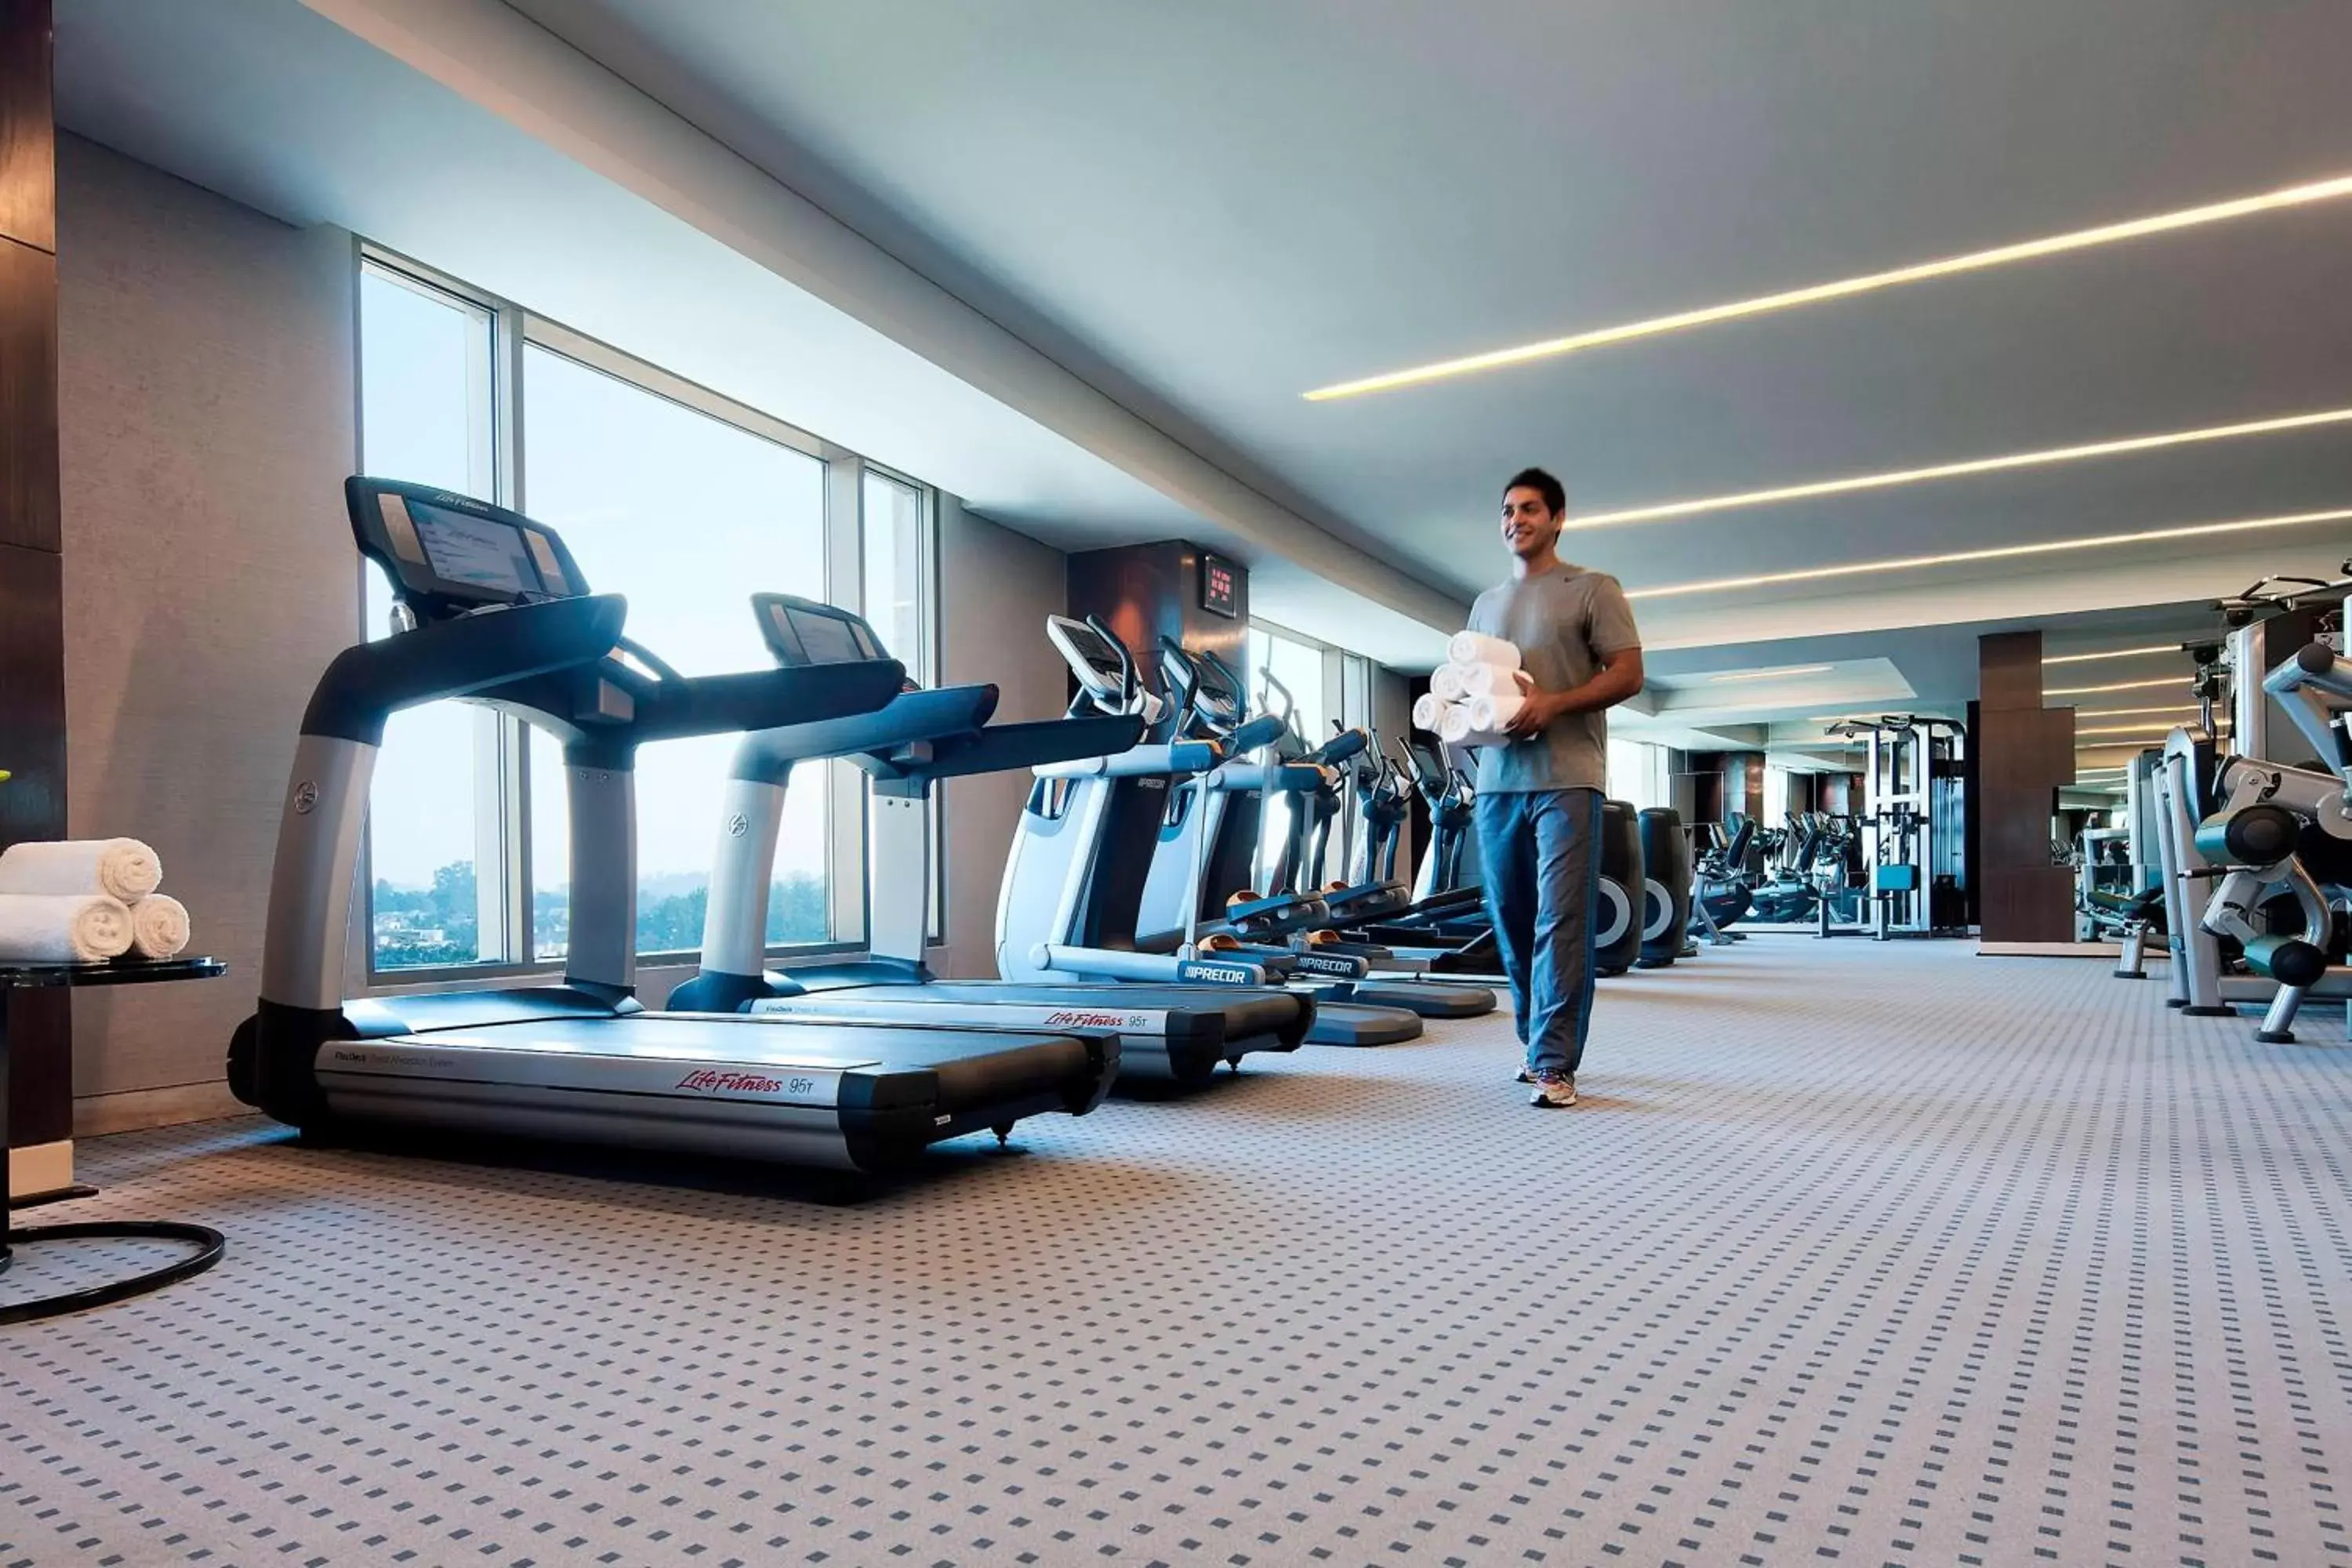 Fitness centre/facilities, Fitness Center/Facilities in JW Marriott Hotel Chandigarh